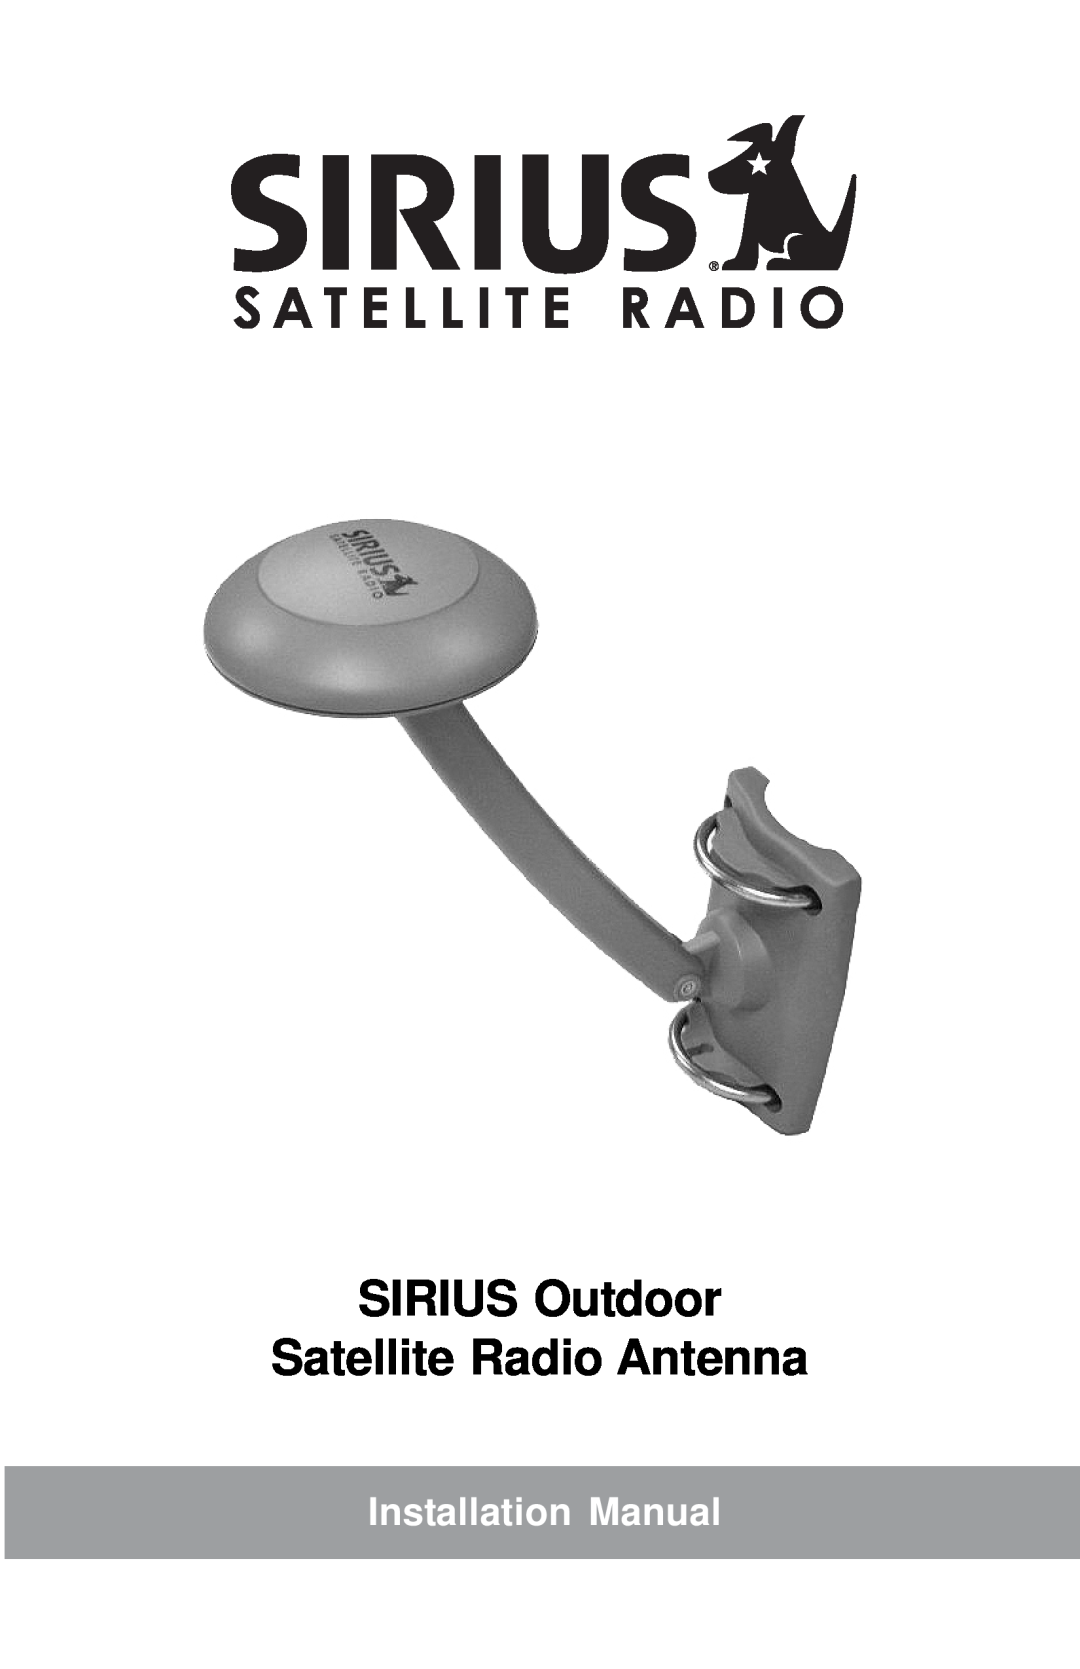 Sirius Satellite Radio 128-8662, SHA1 installation manual SIRIUS Outdoor Satellite Radio Antenna, Installation Manual 